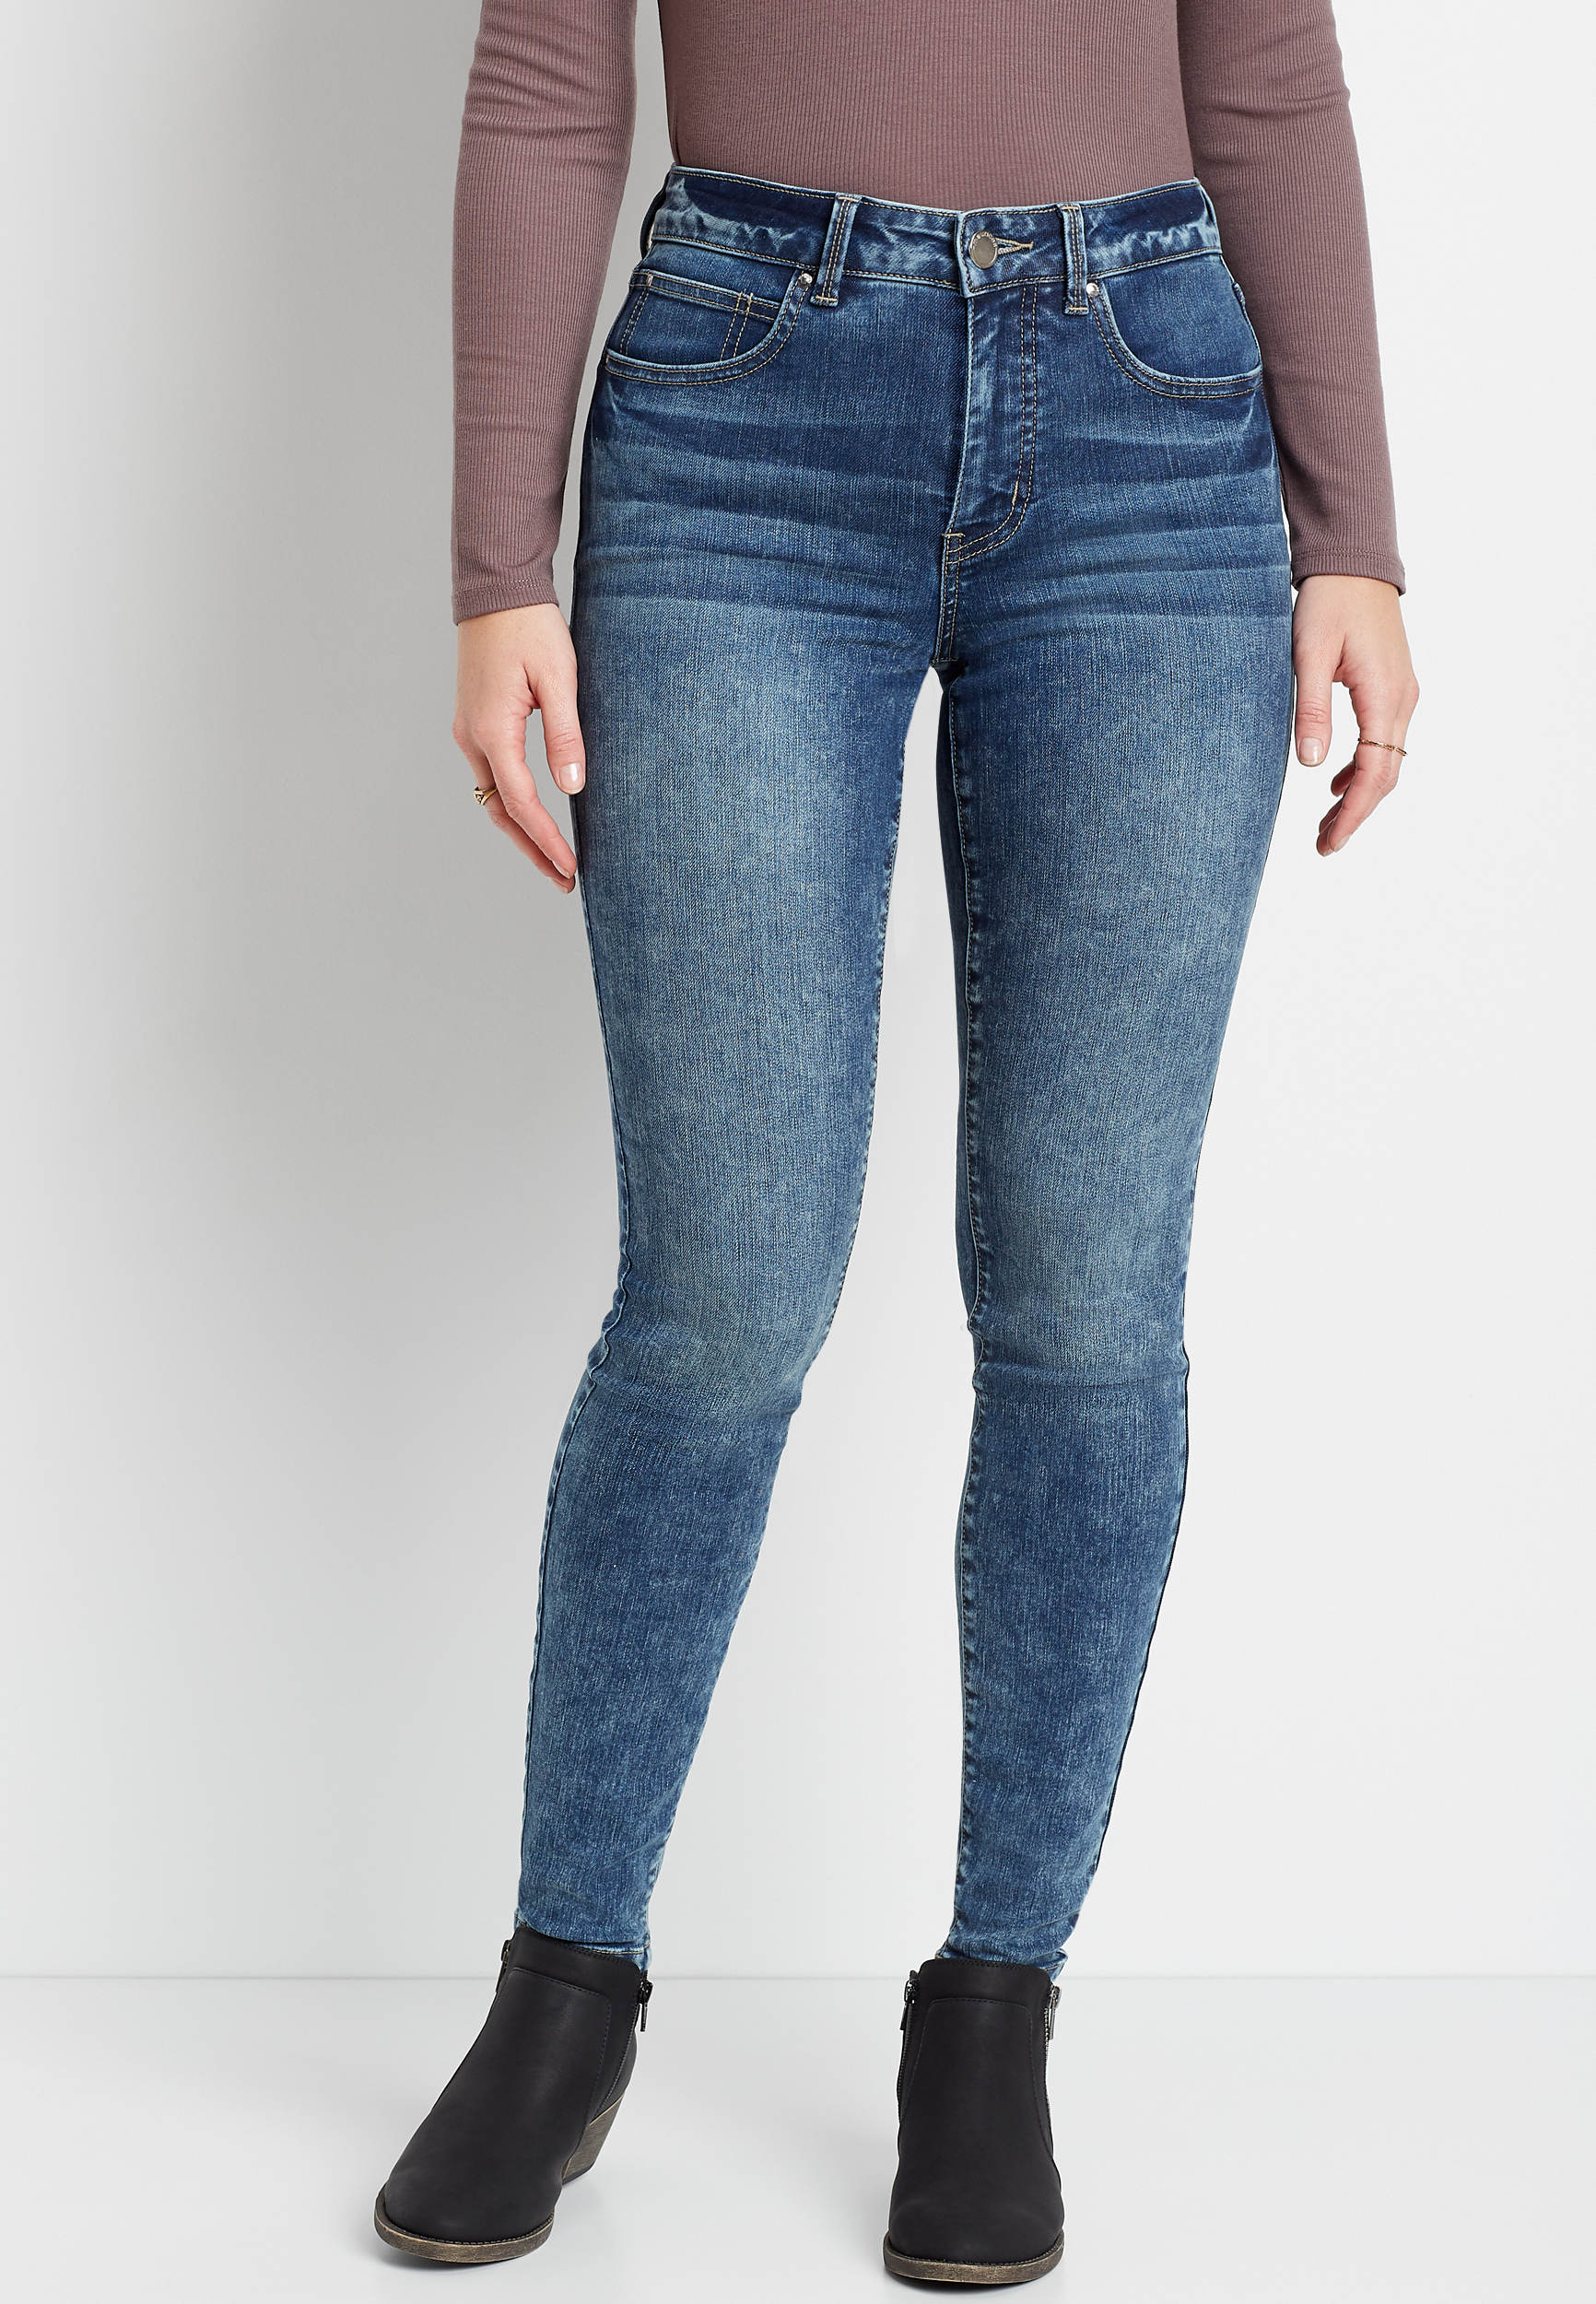 size 16 long jeans